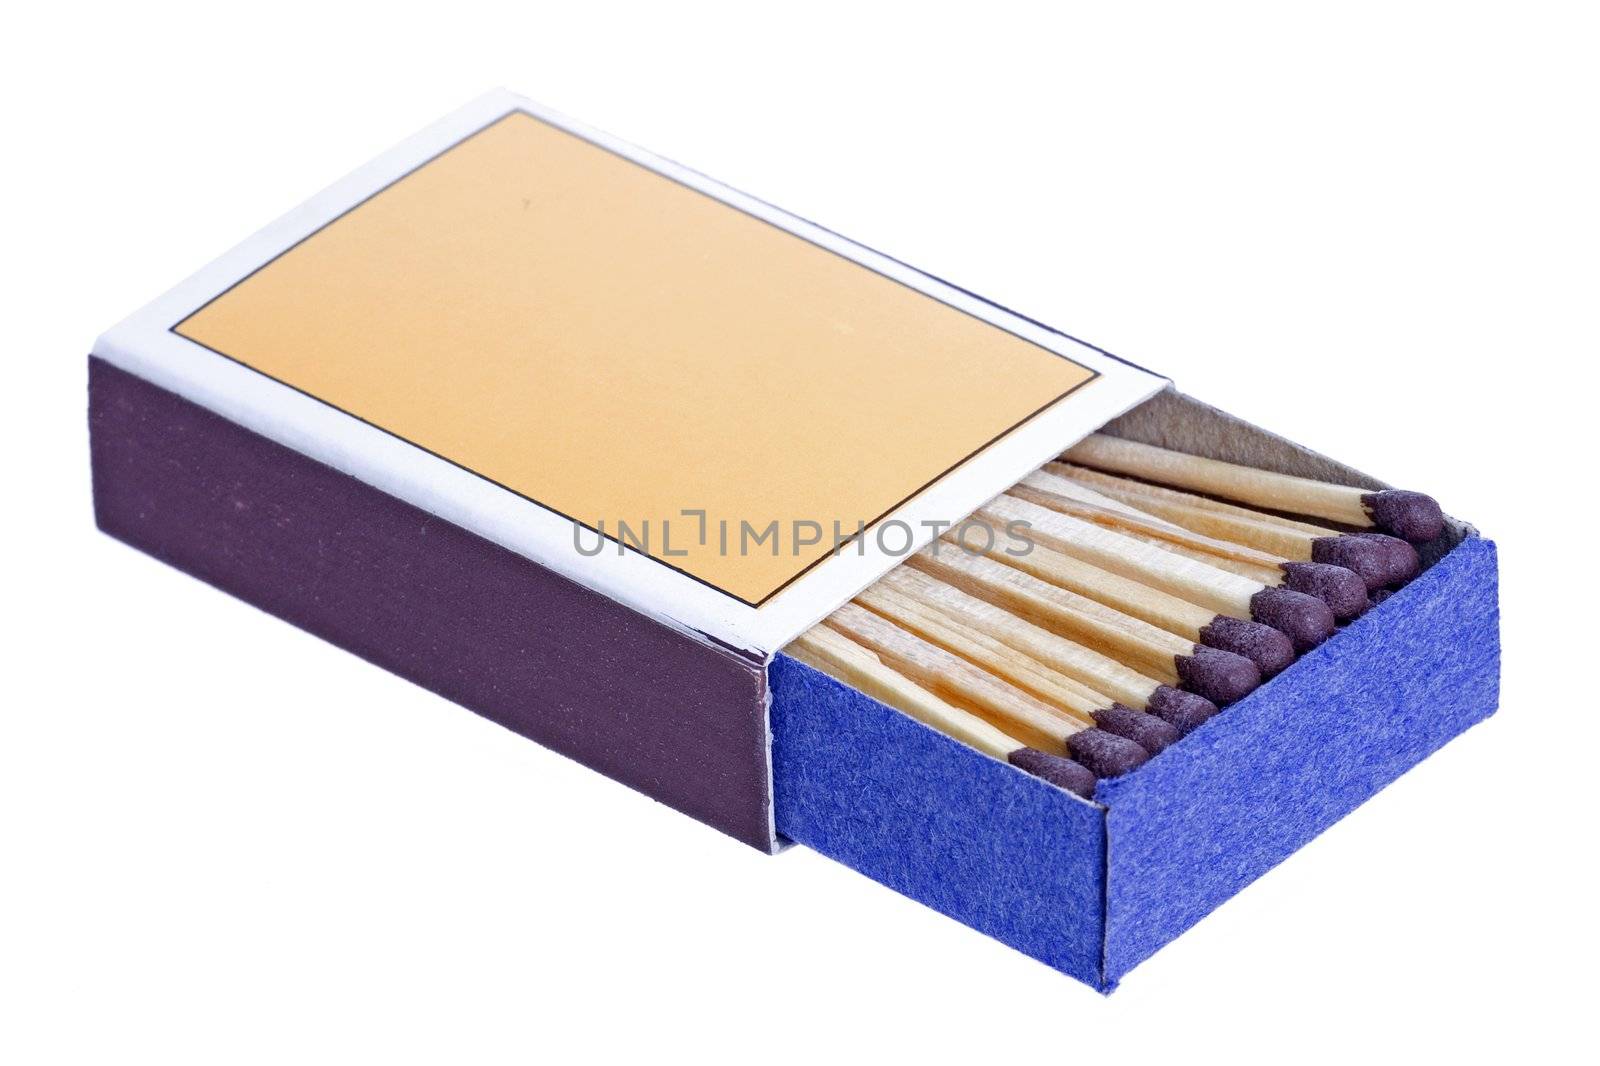 Match Sticks in a Box by shariffc